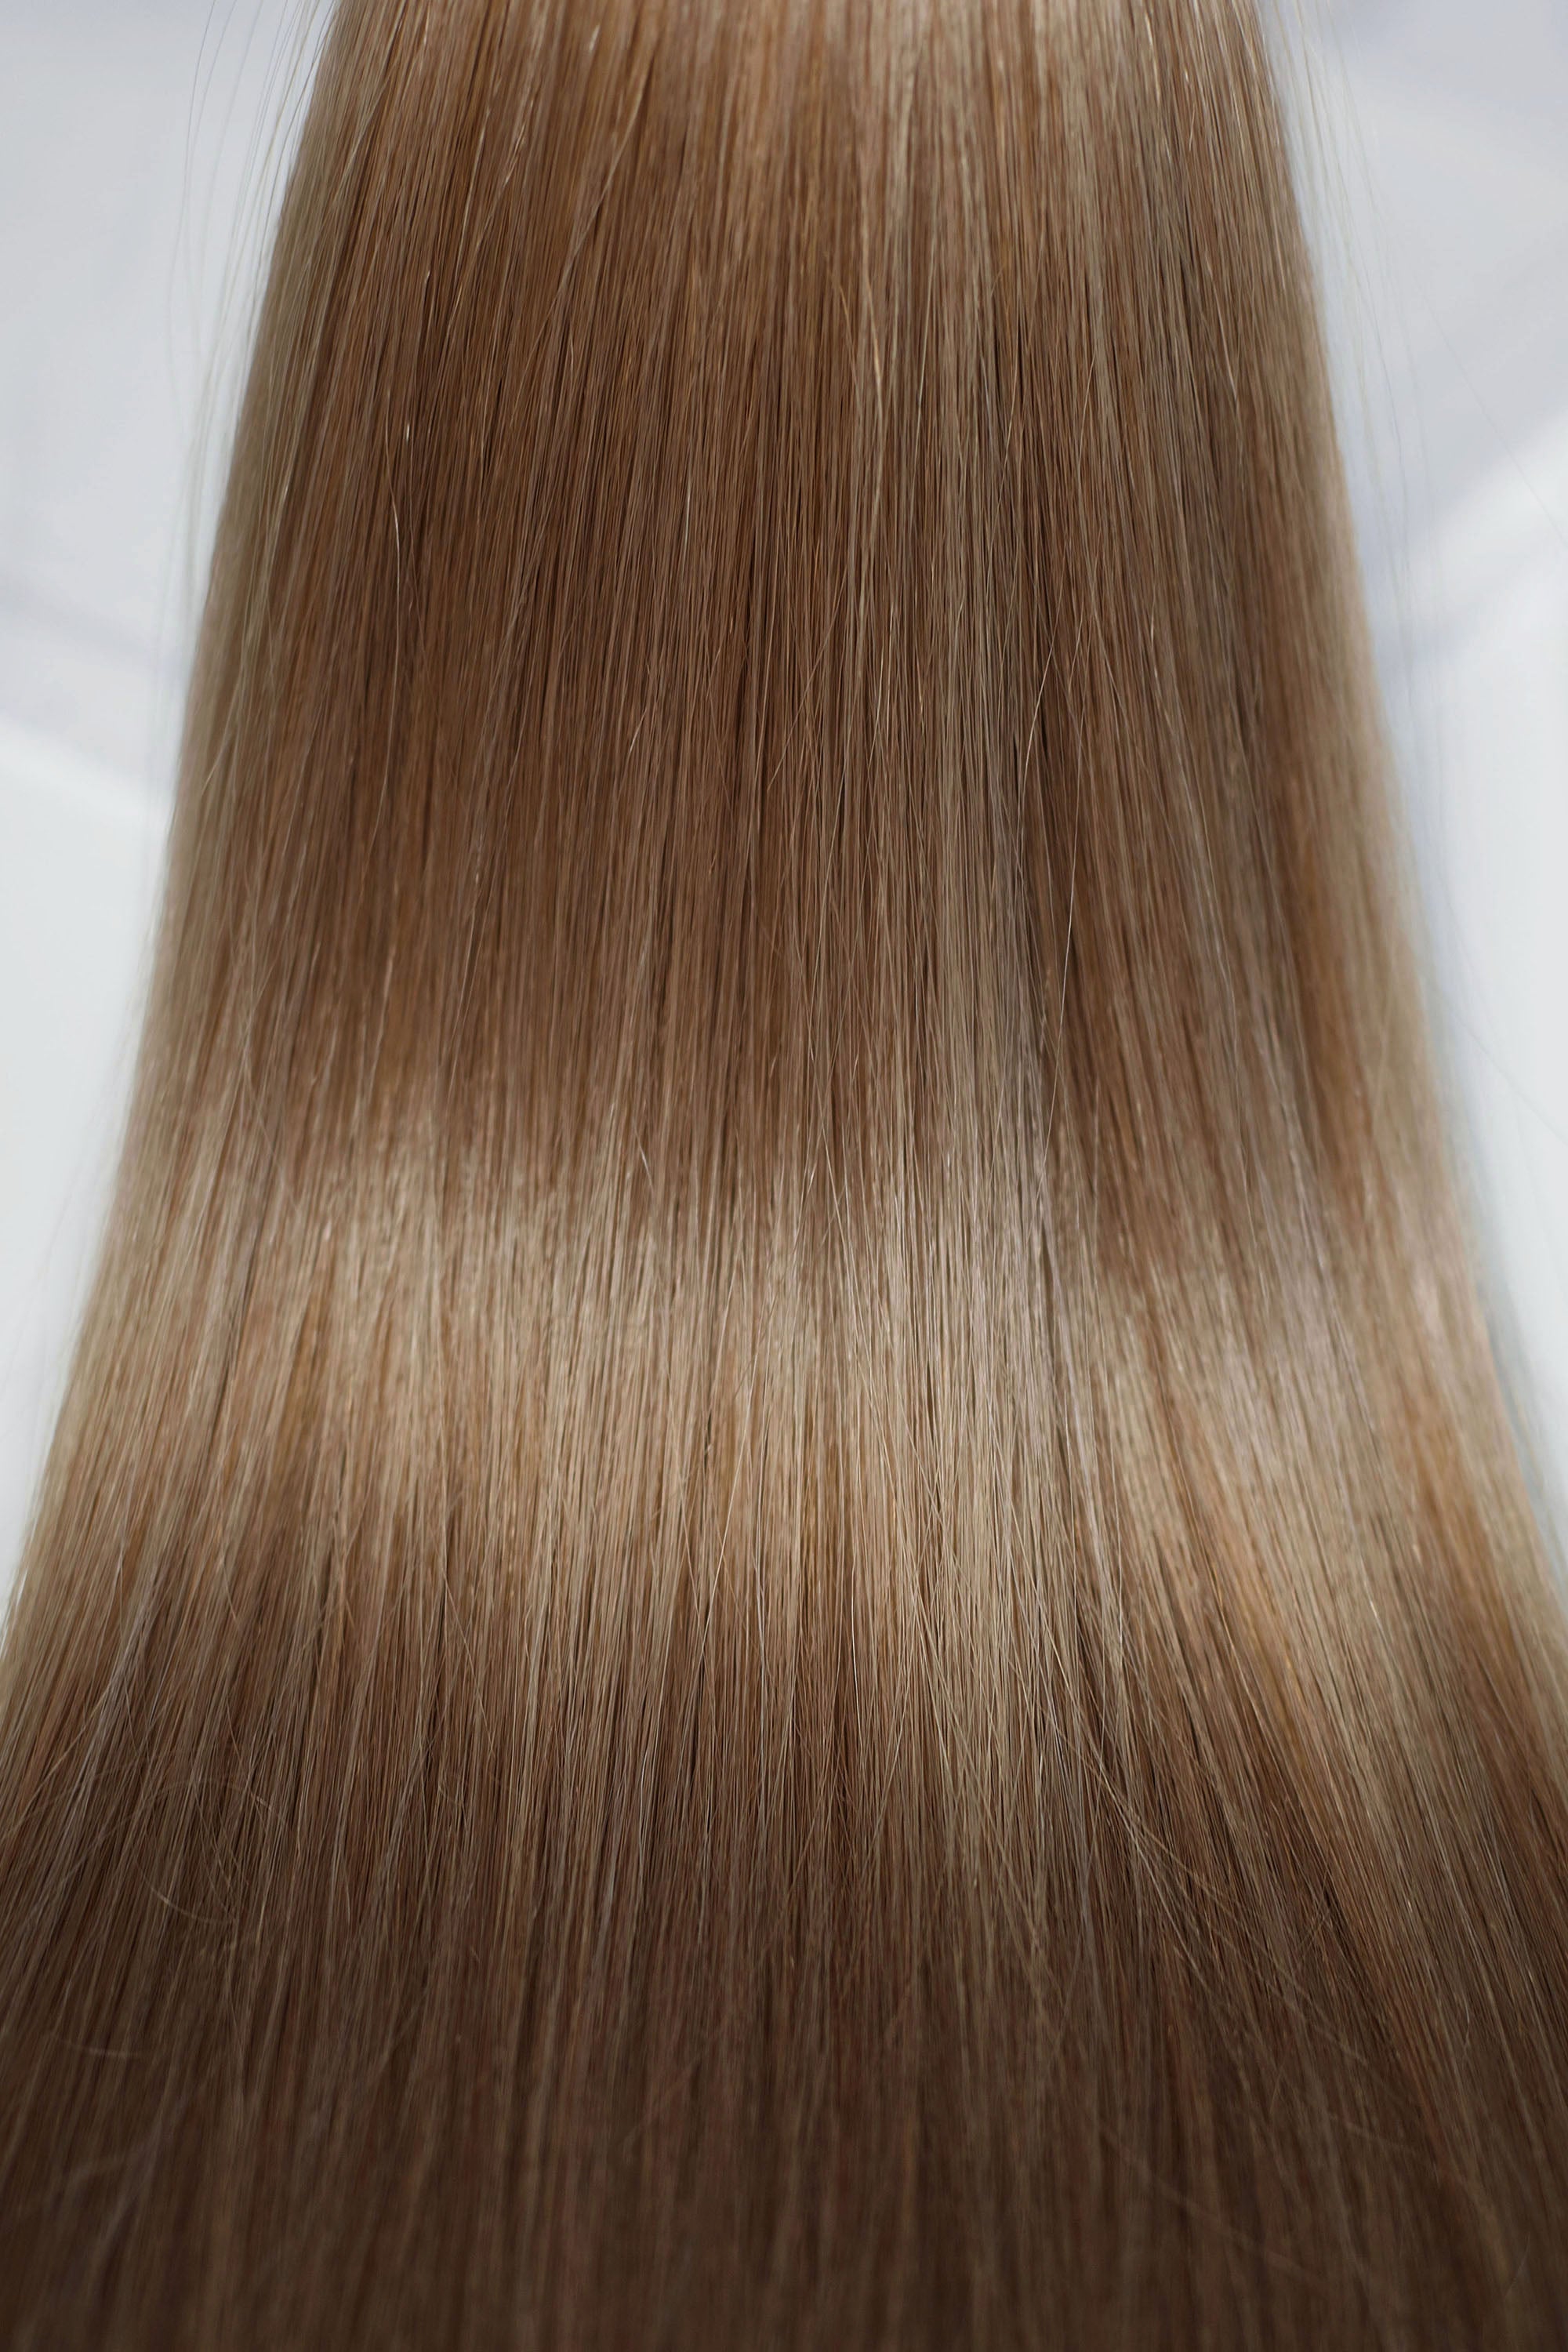 Behair professional Keratin Tip "Premium" 26" (65cm) Natural Straight Light Ash Brown #10 - 25g (1g each pcs) hair extensions